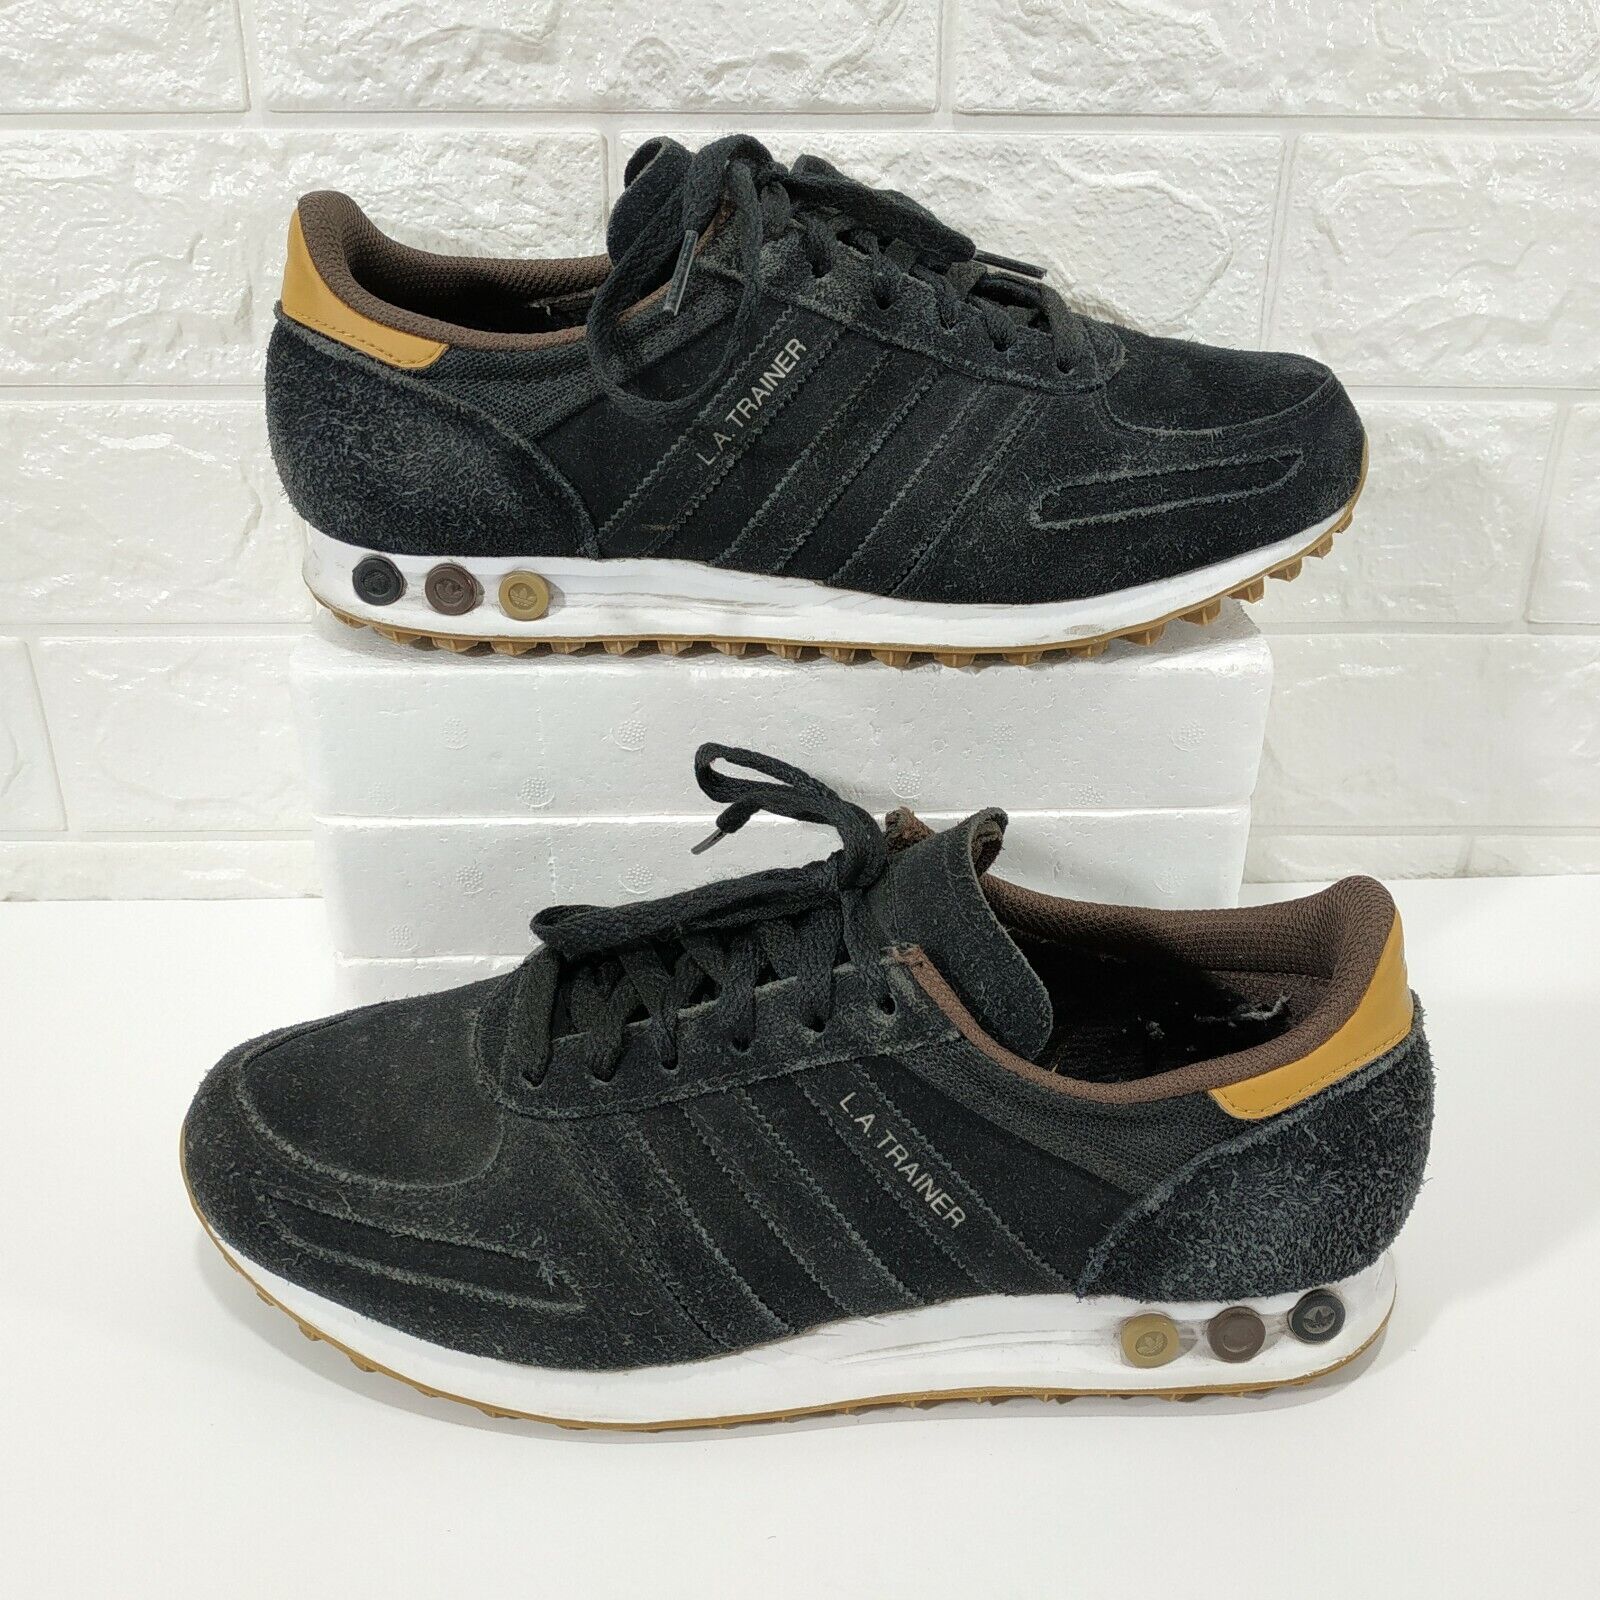 Adidas LA Trainer Black Sneakers Sz US 10 EUR 44 eBay